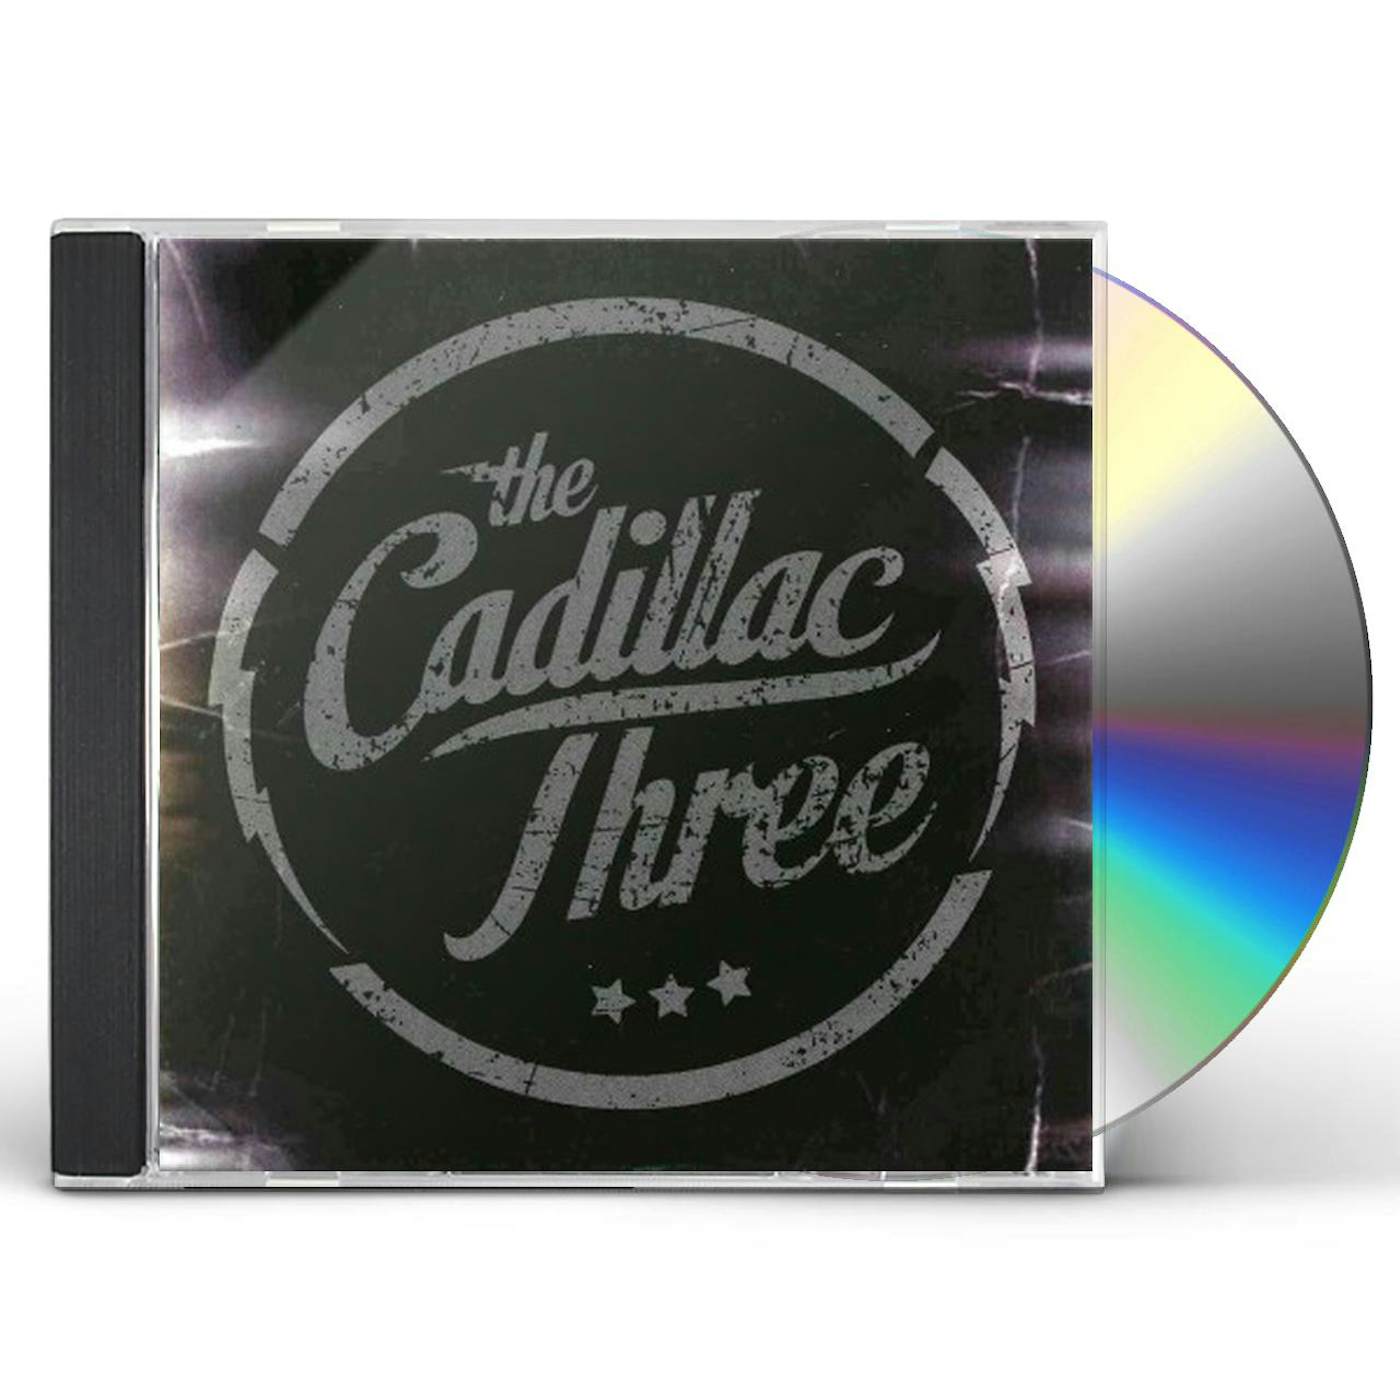 The Cadillac Three CD